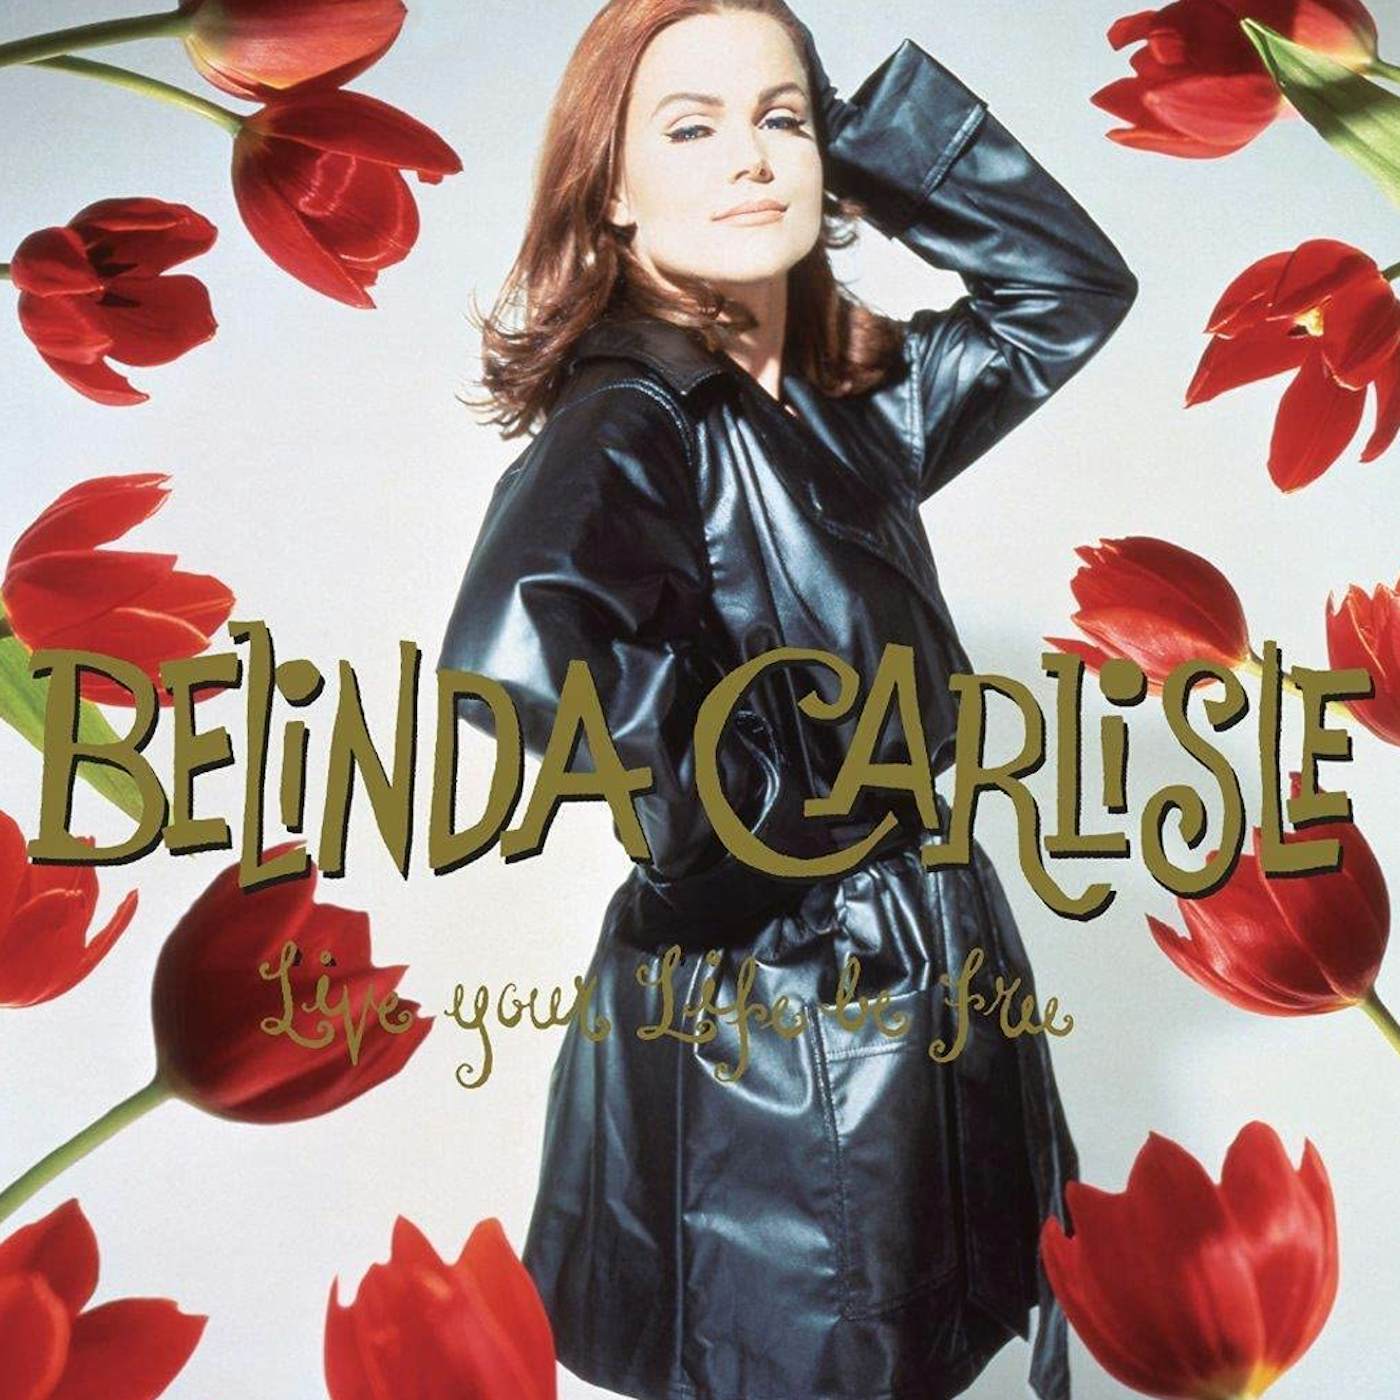 Belinda Carlisle LP Vinyl Record - Live Your Life Be Free - 30th Anniversary